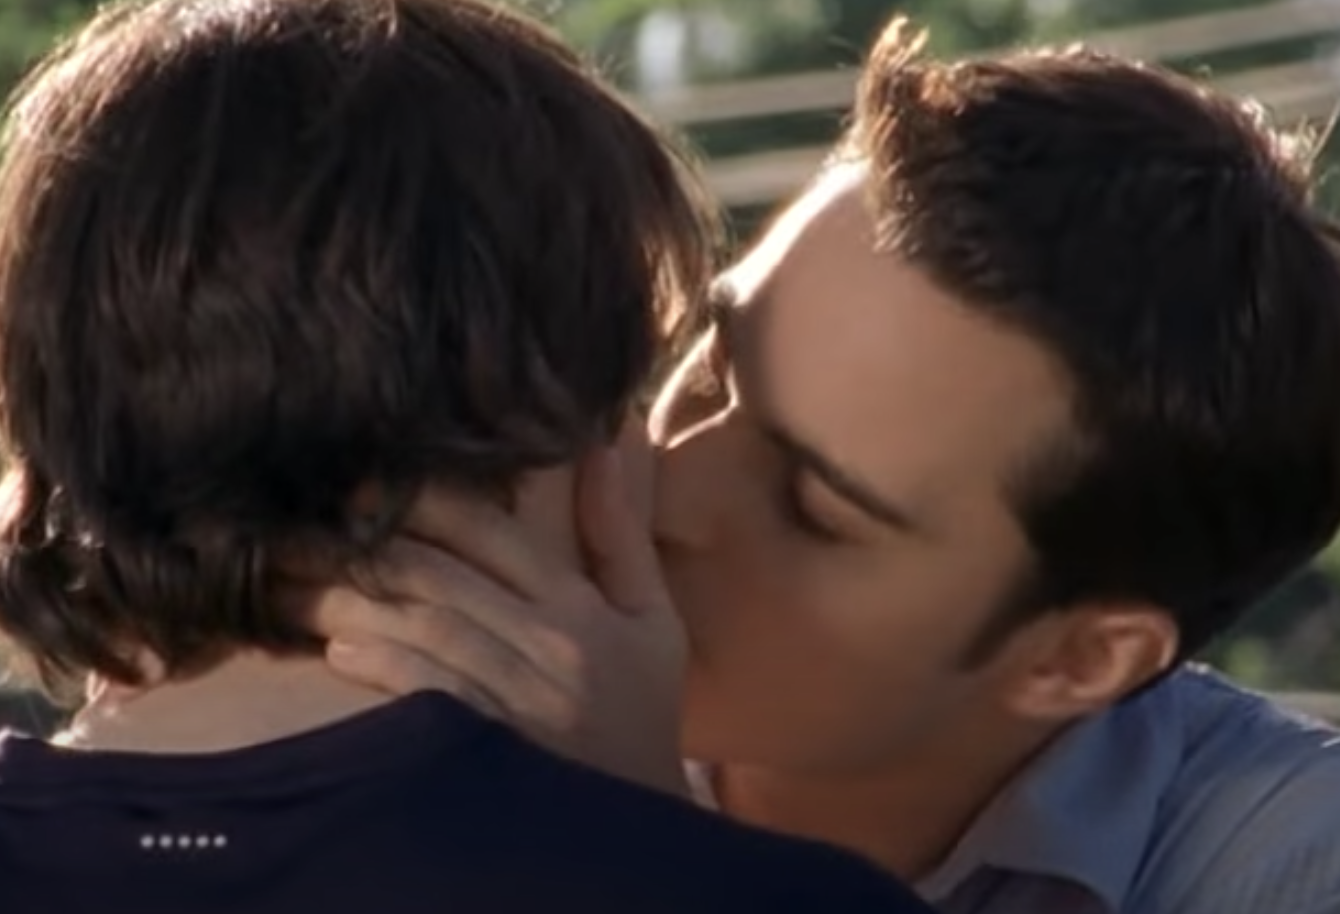 Jack and Ethan kiss